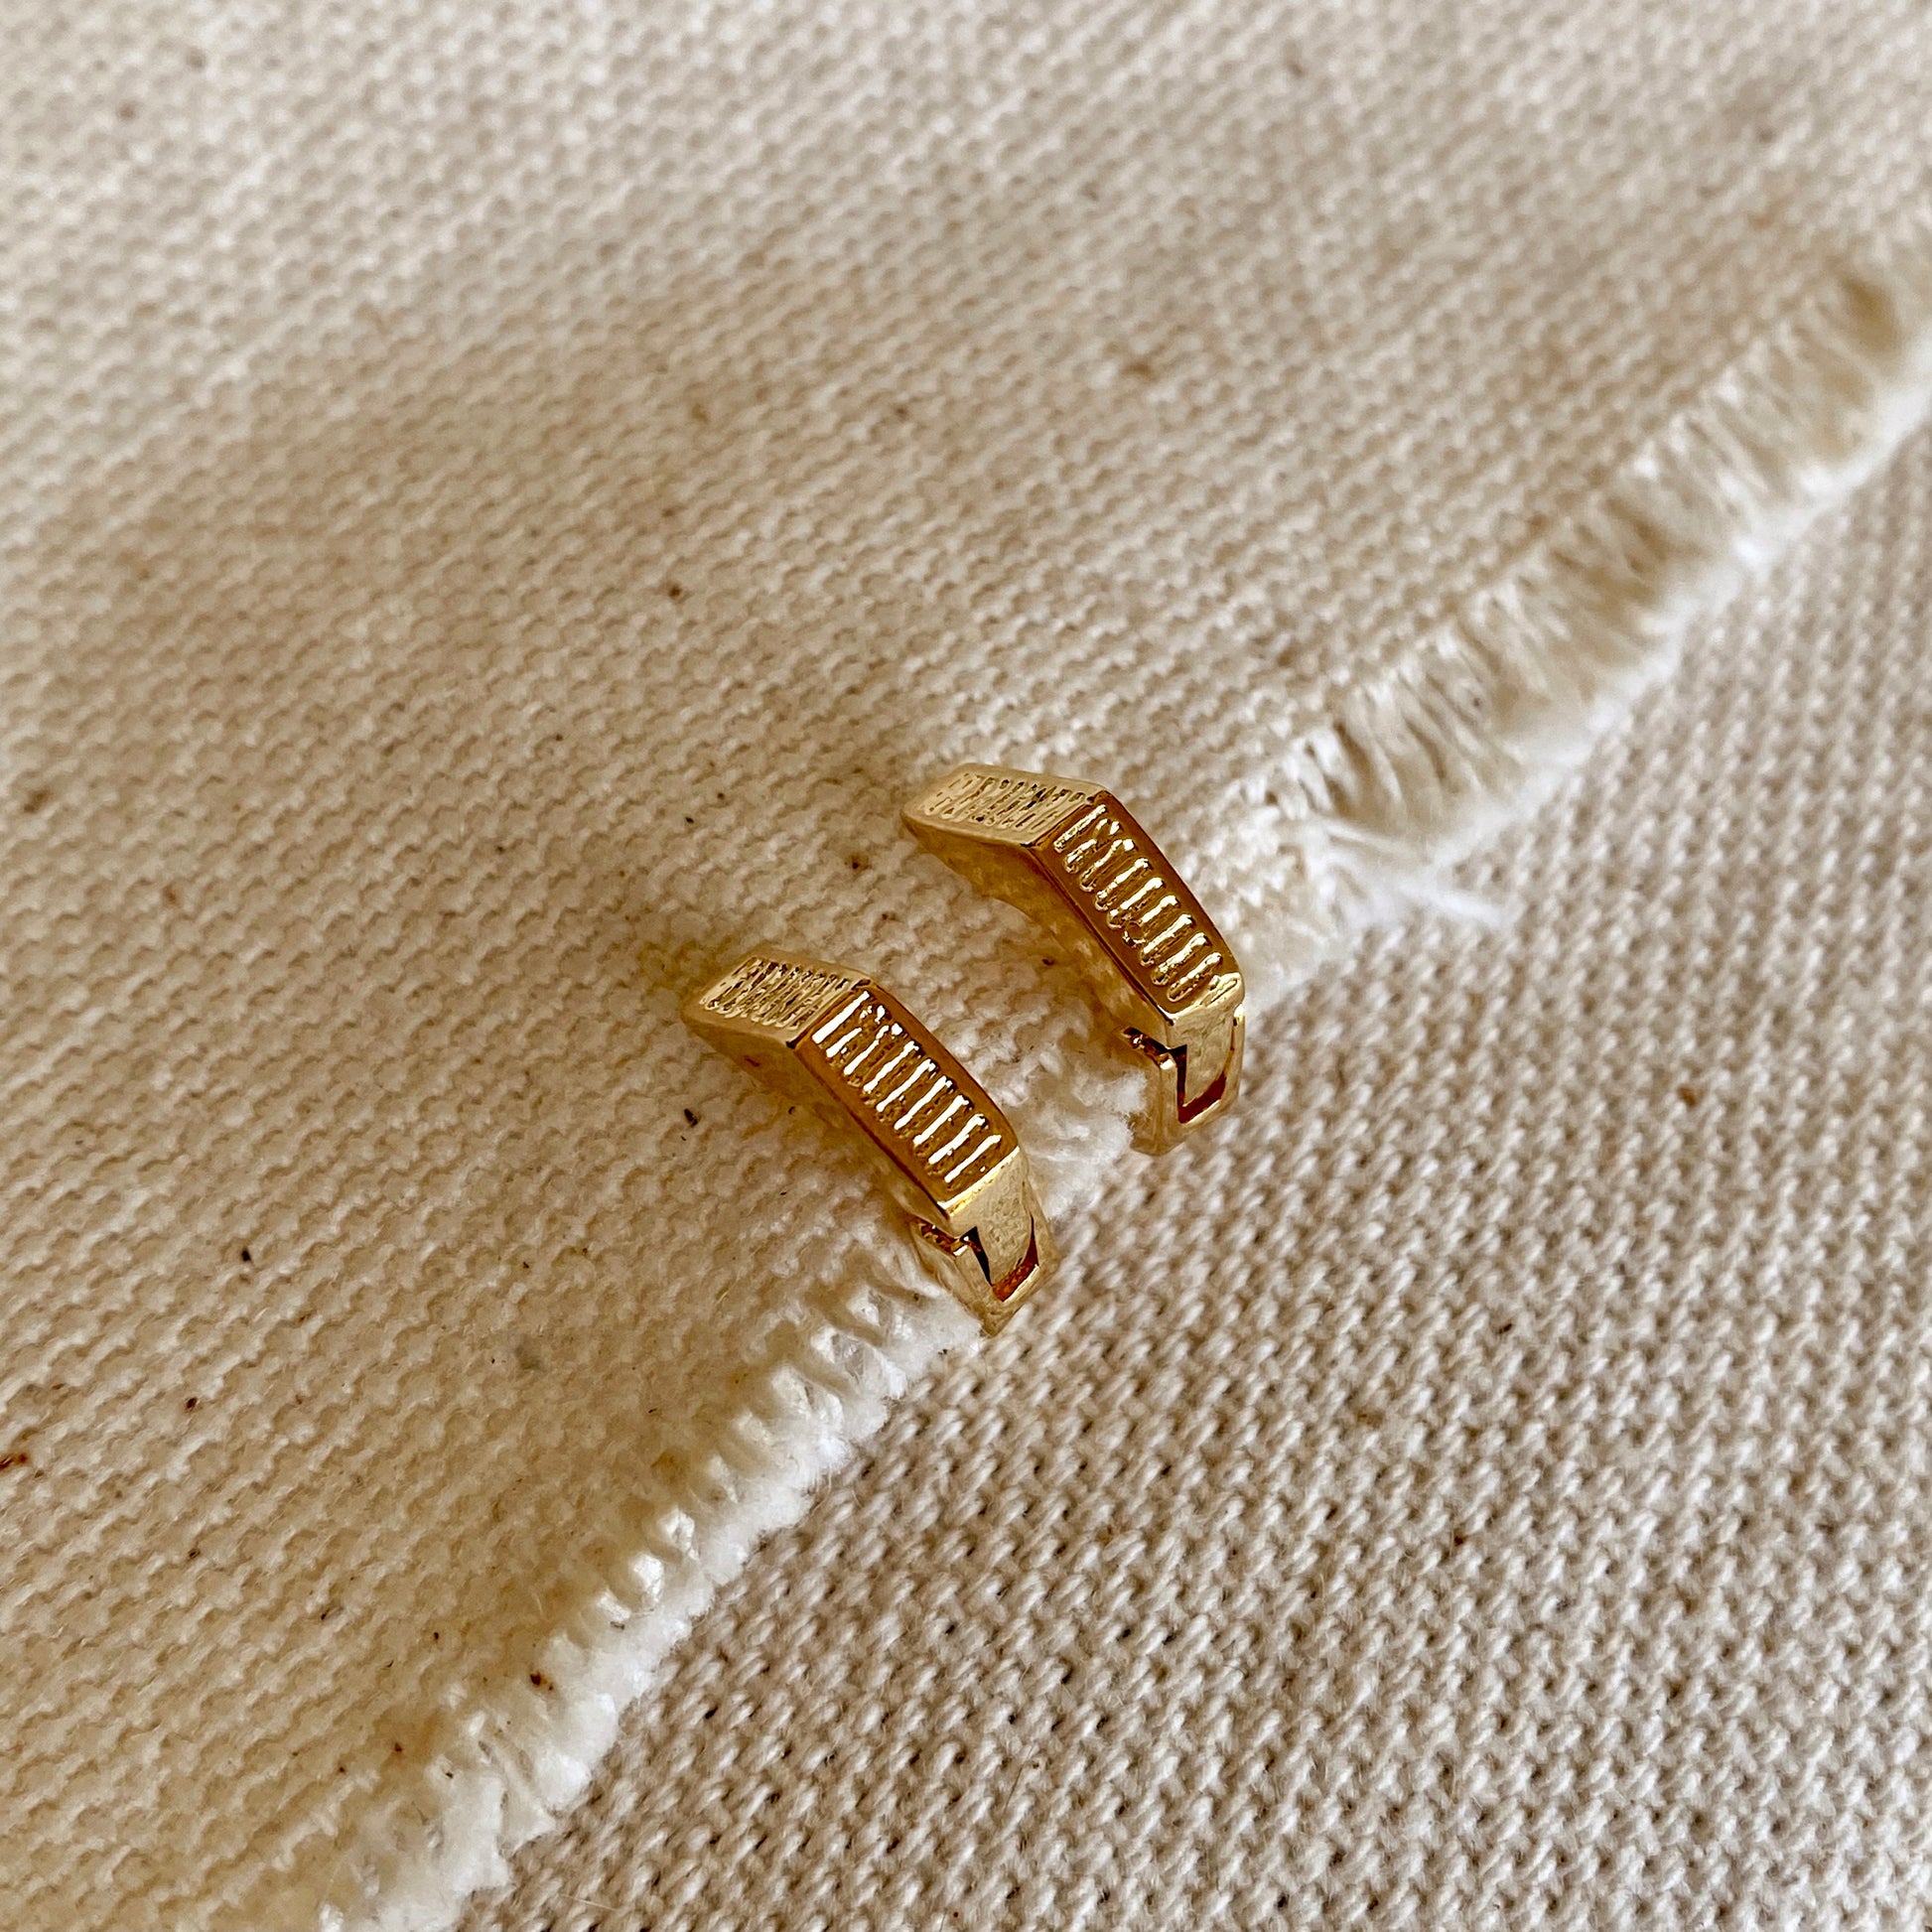 GoldFi 18k Gold Filled Textured Shaped Clicker Hoop Earrings